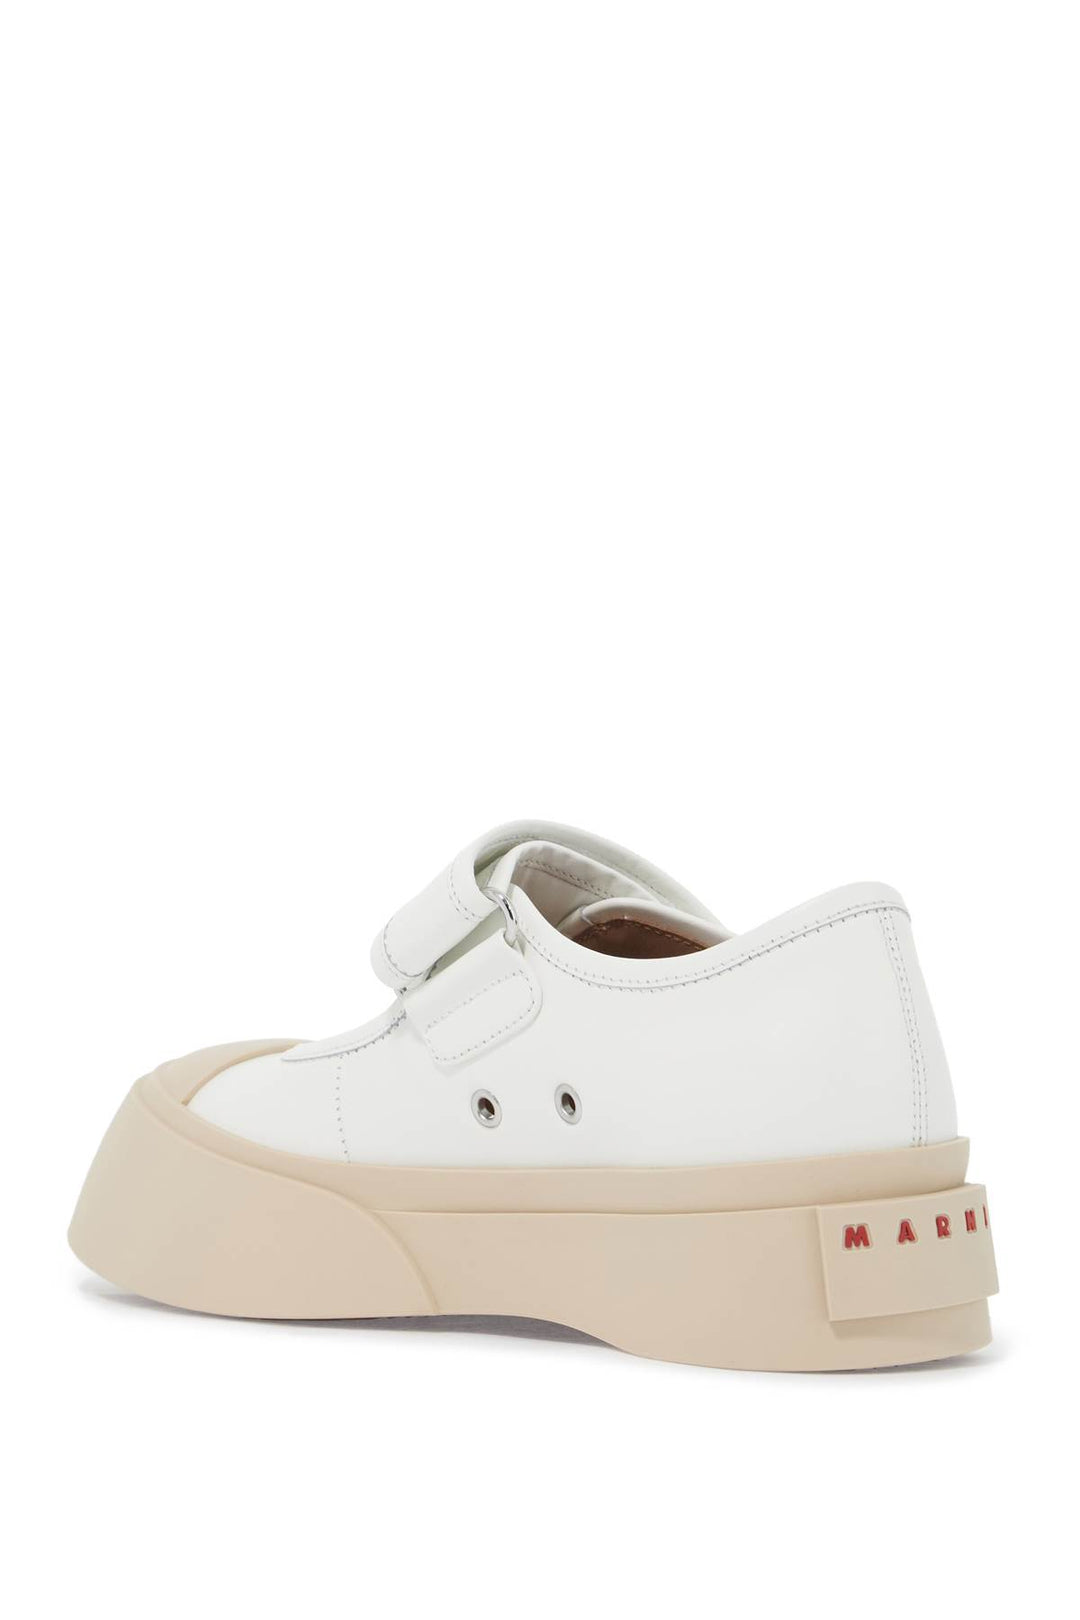 Marni Pablo Mary Jane Nappa Leather Sneakers   White